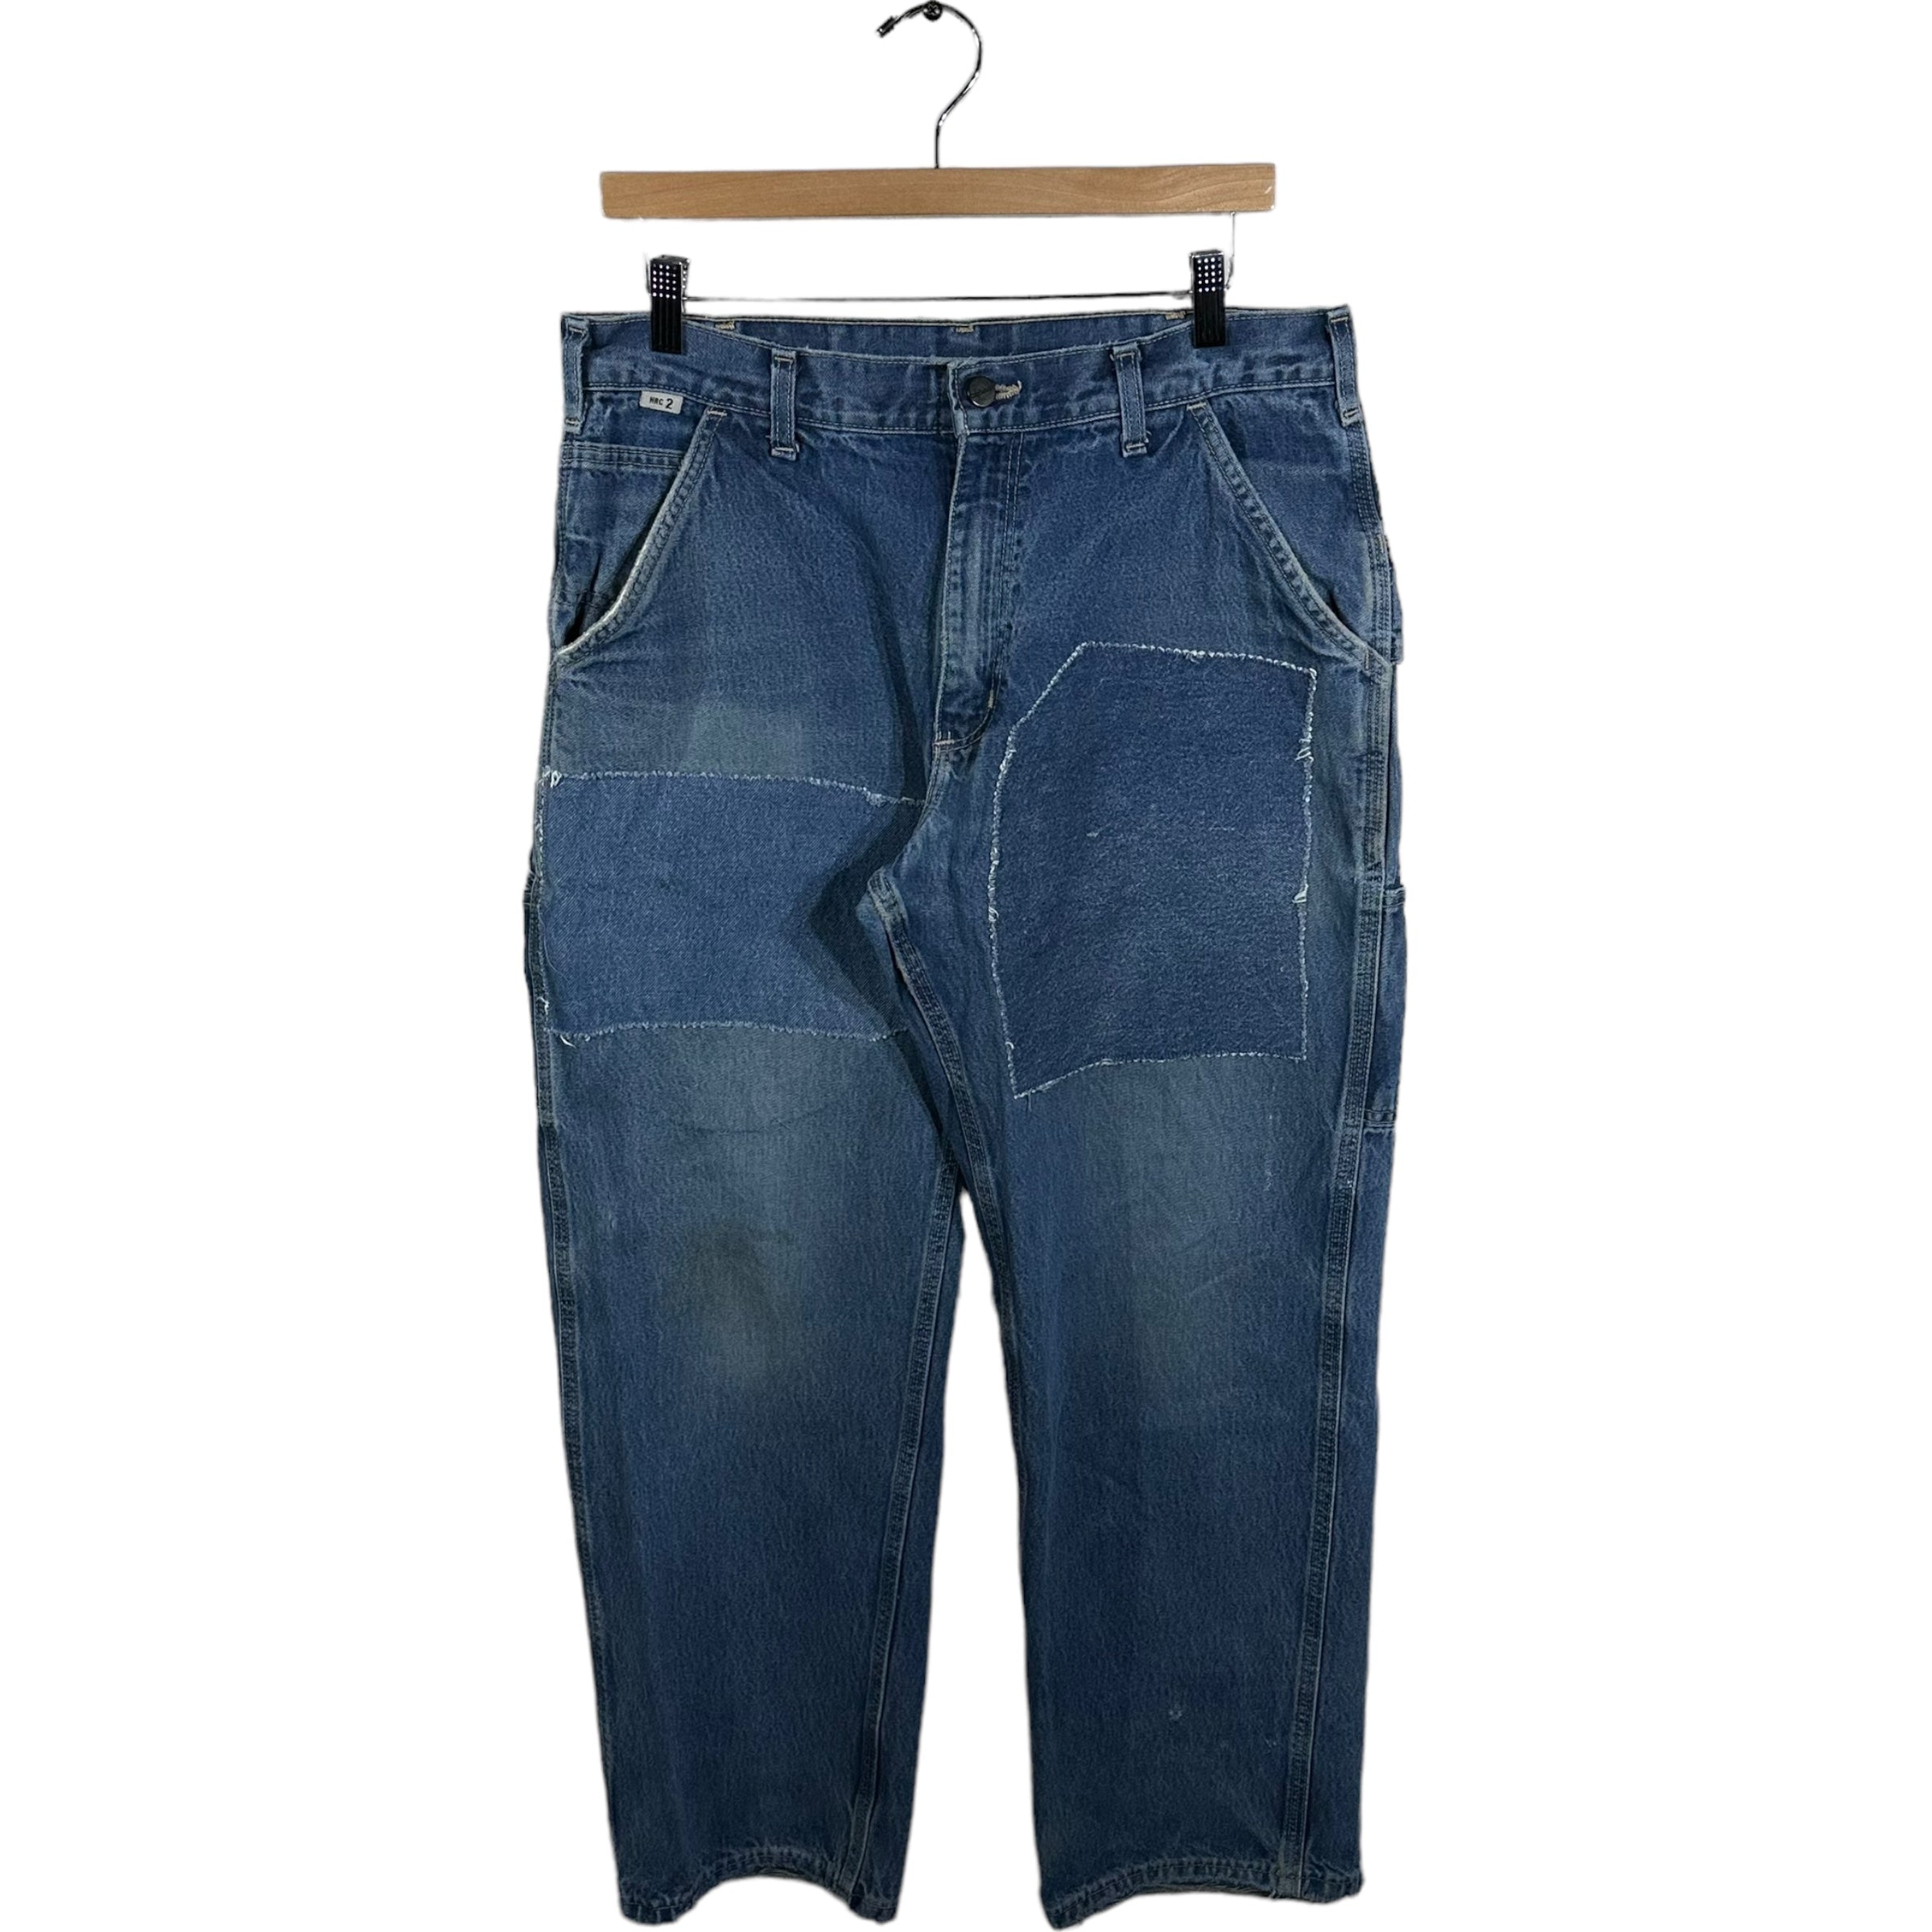 Vintage Carhartt Distressed Patch Carpenter Jeans